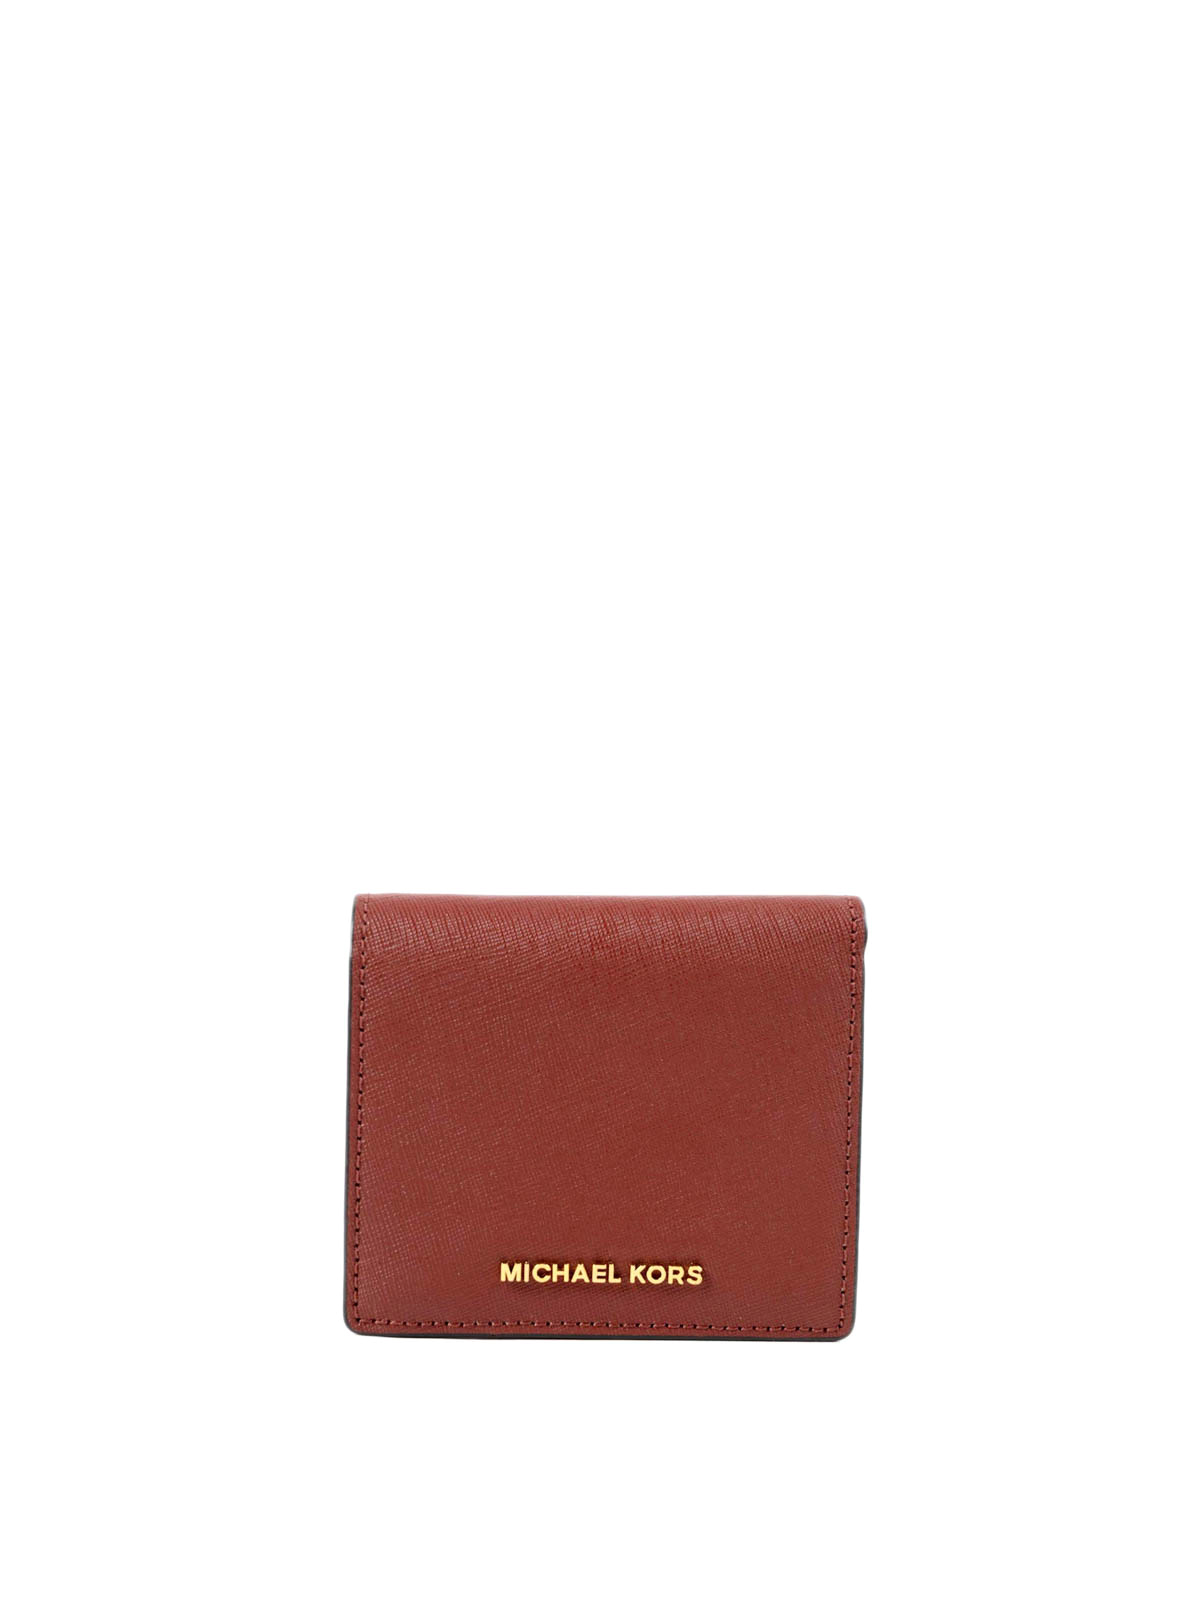 Wallets & purses Michael Kors - Jet Set Travel wallet - 32T6GTVD2L001